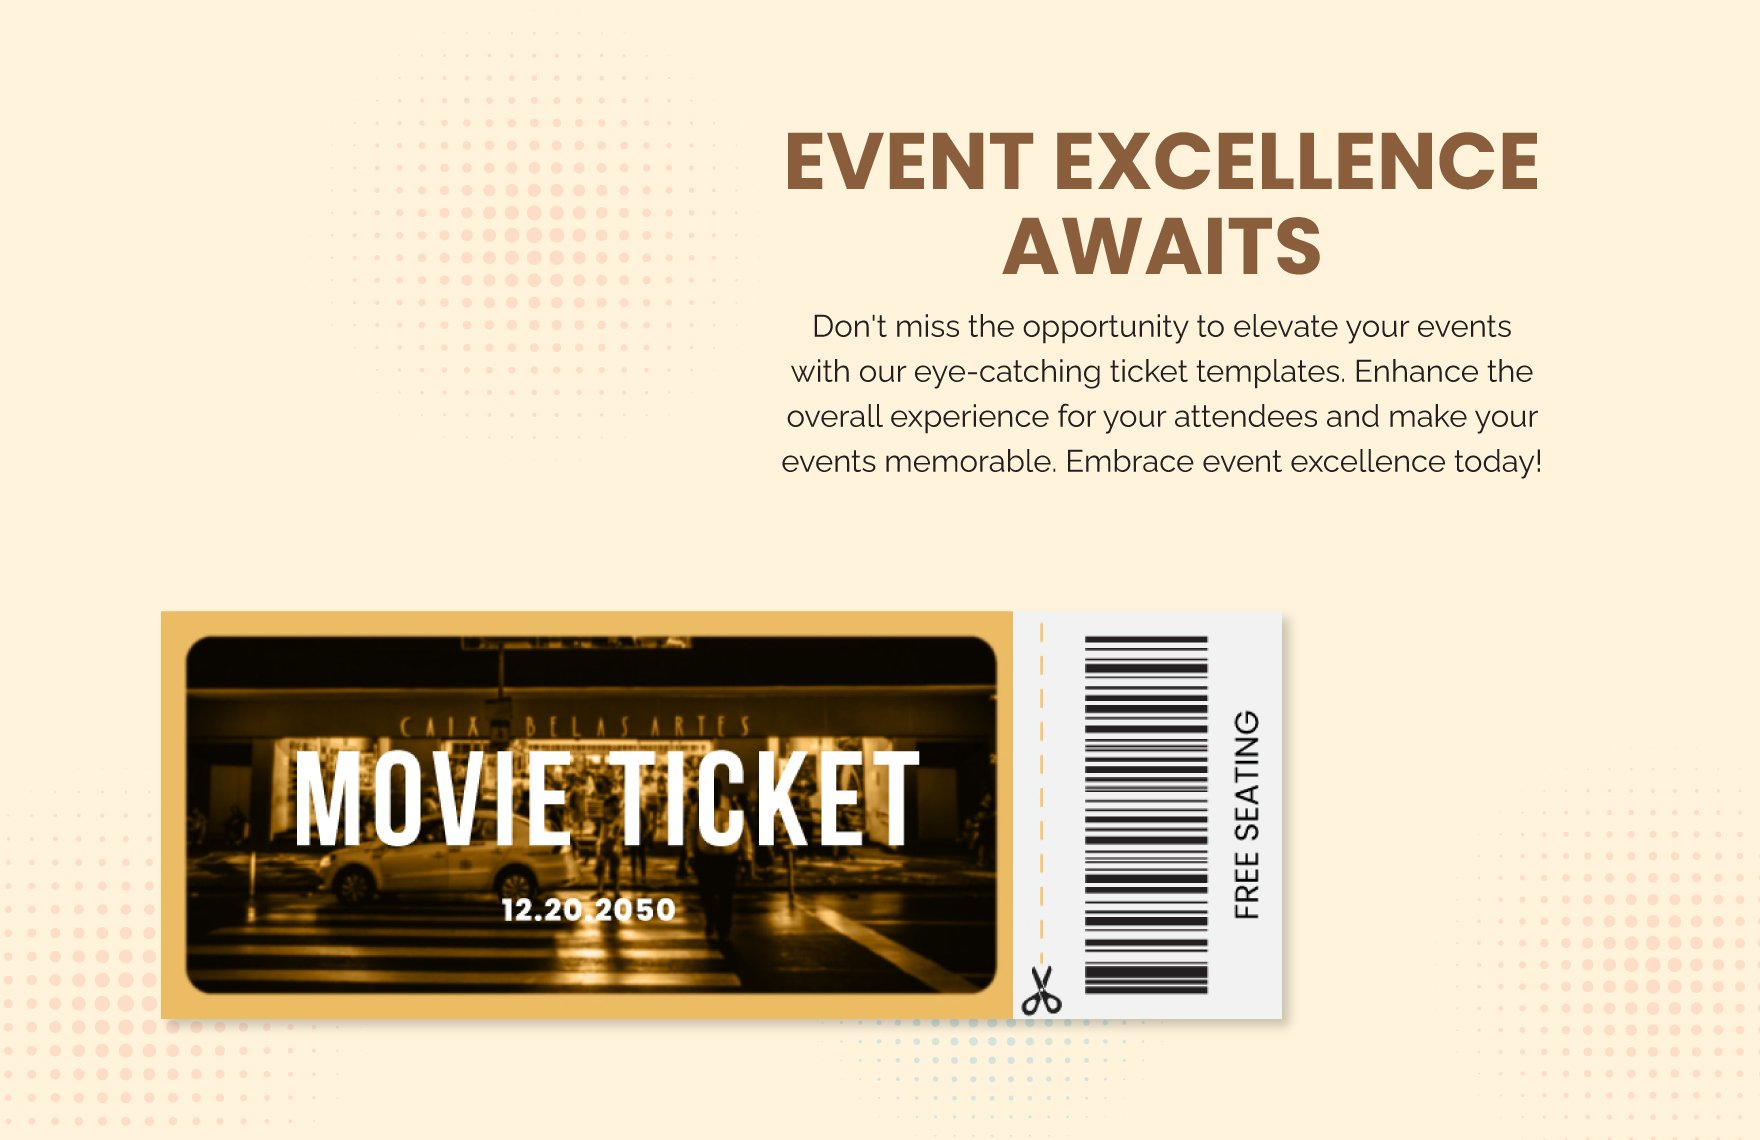 Movie Ticket Template